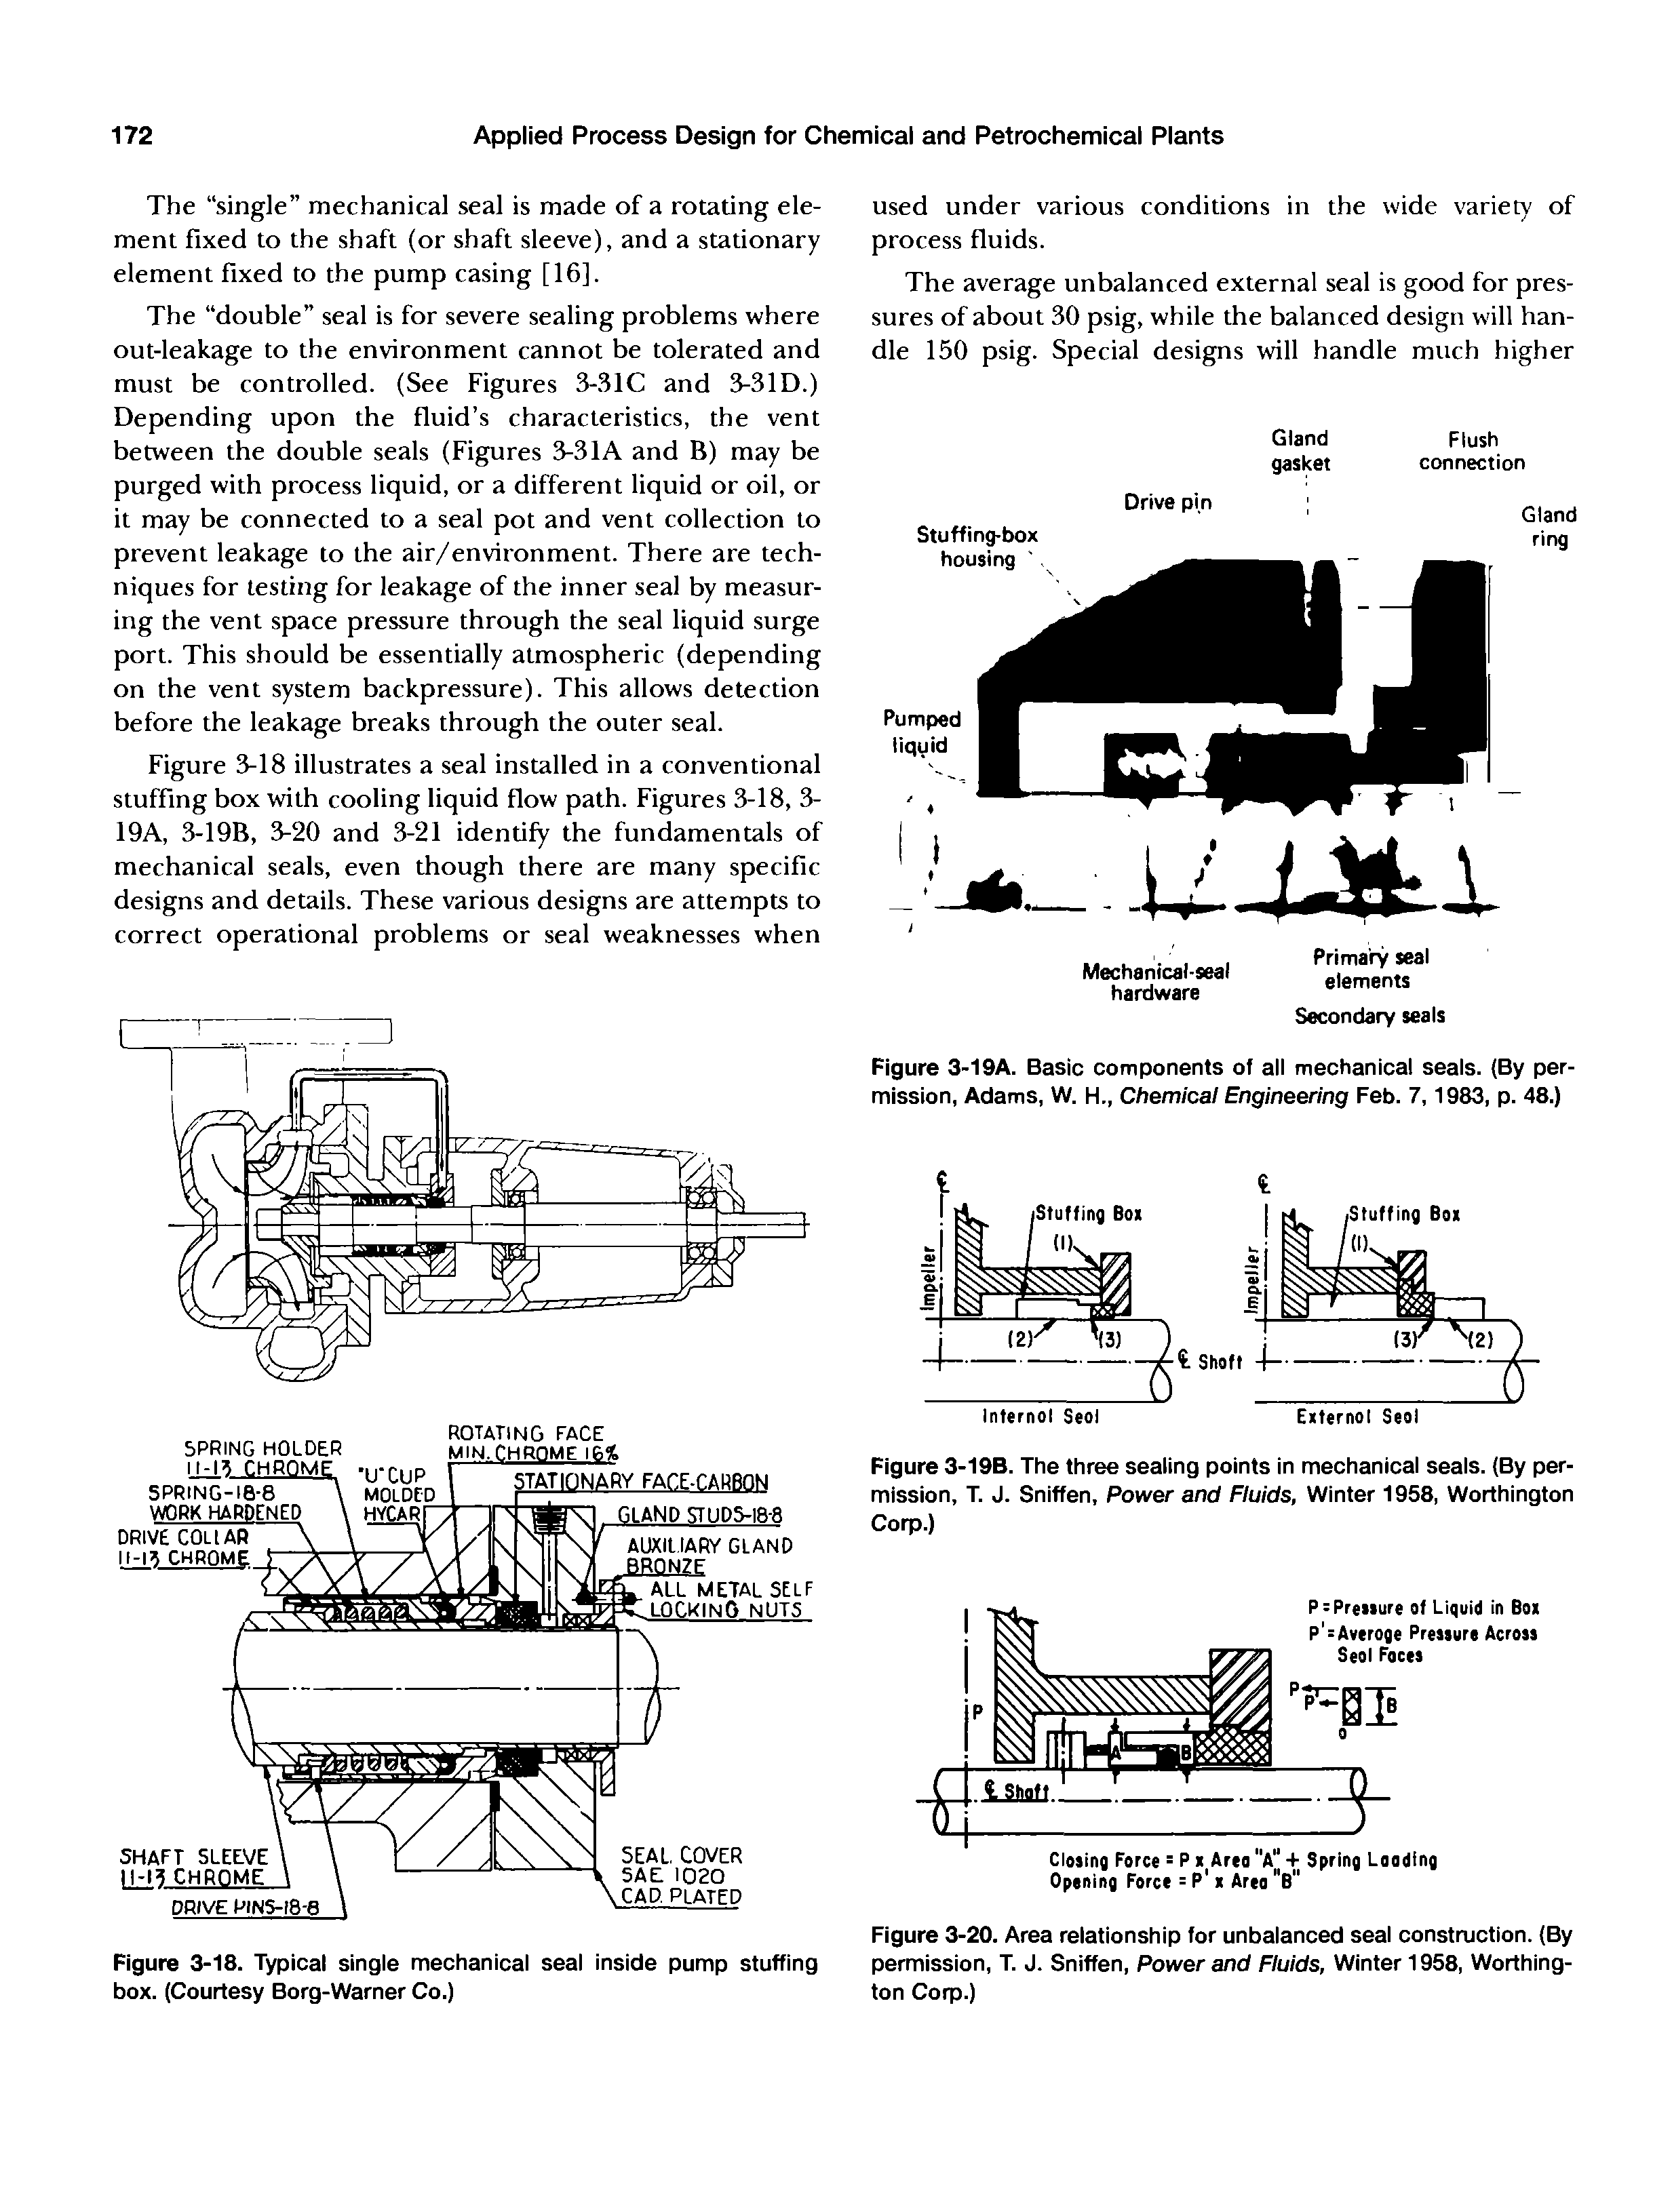 Figure 3-18. Typical single mechanical seal inside pump stuffing box. (Courtesy Borg-Warner Co.)...